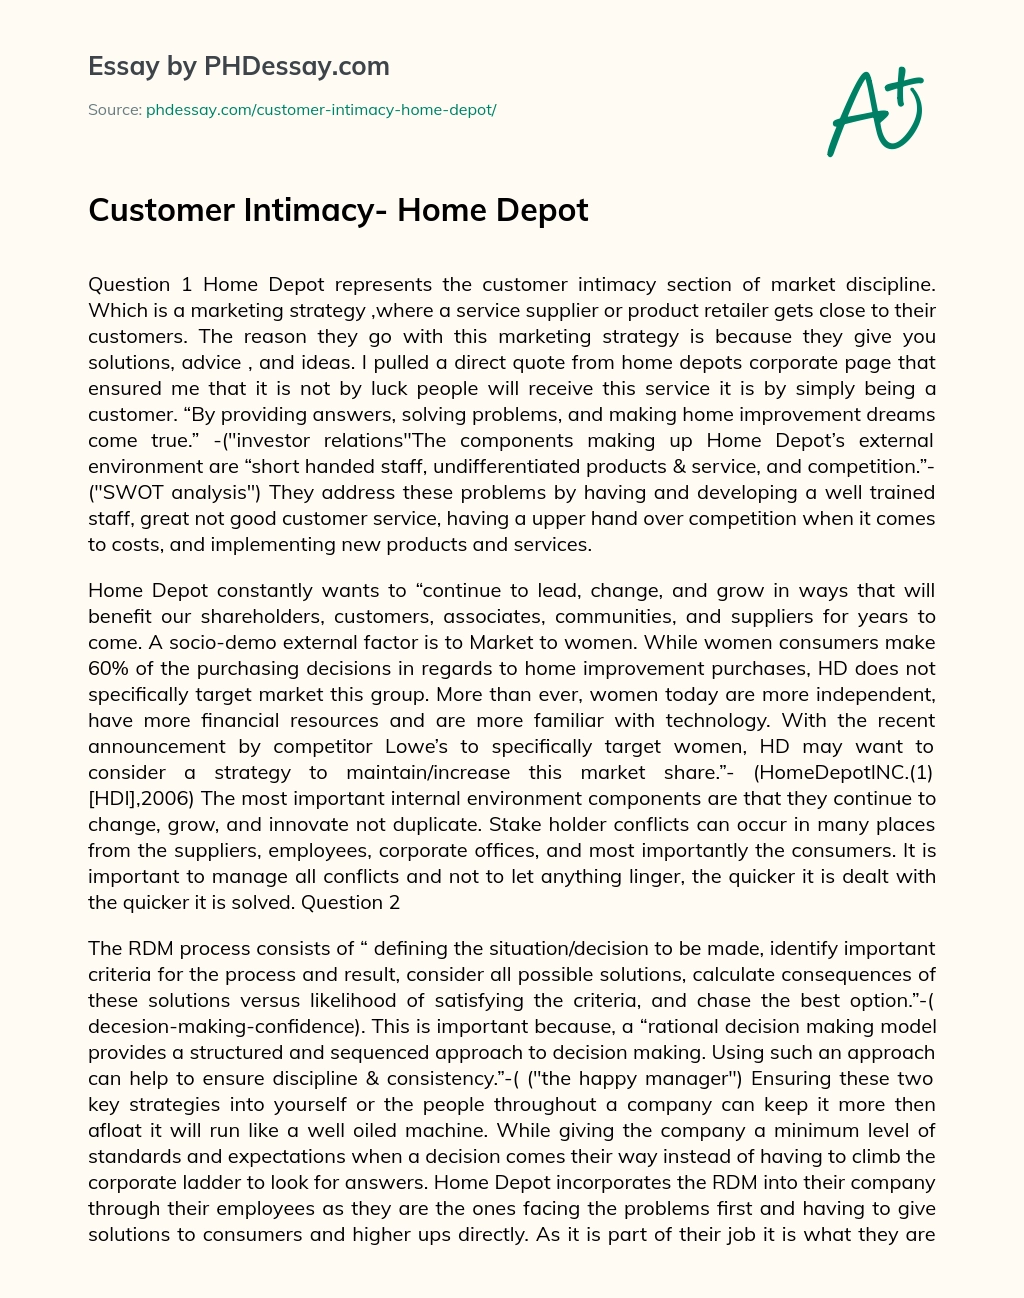 Customer Intimacy- Home Depot essay